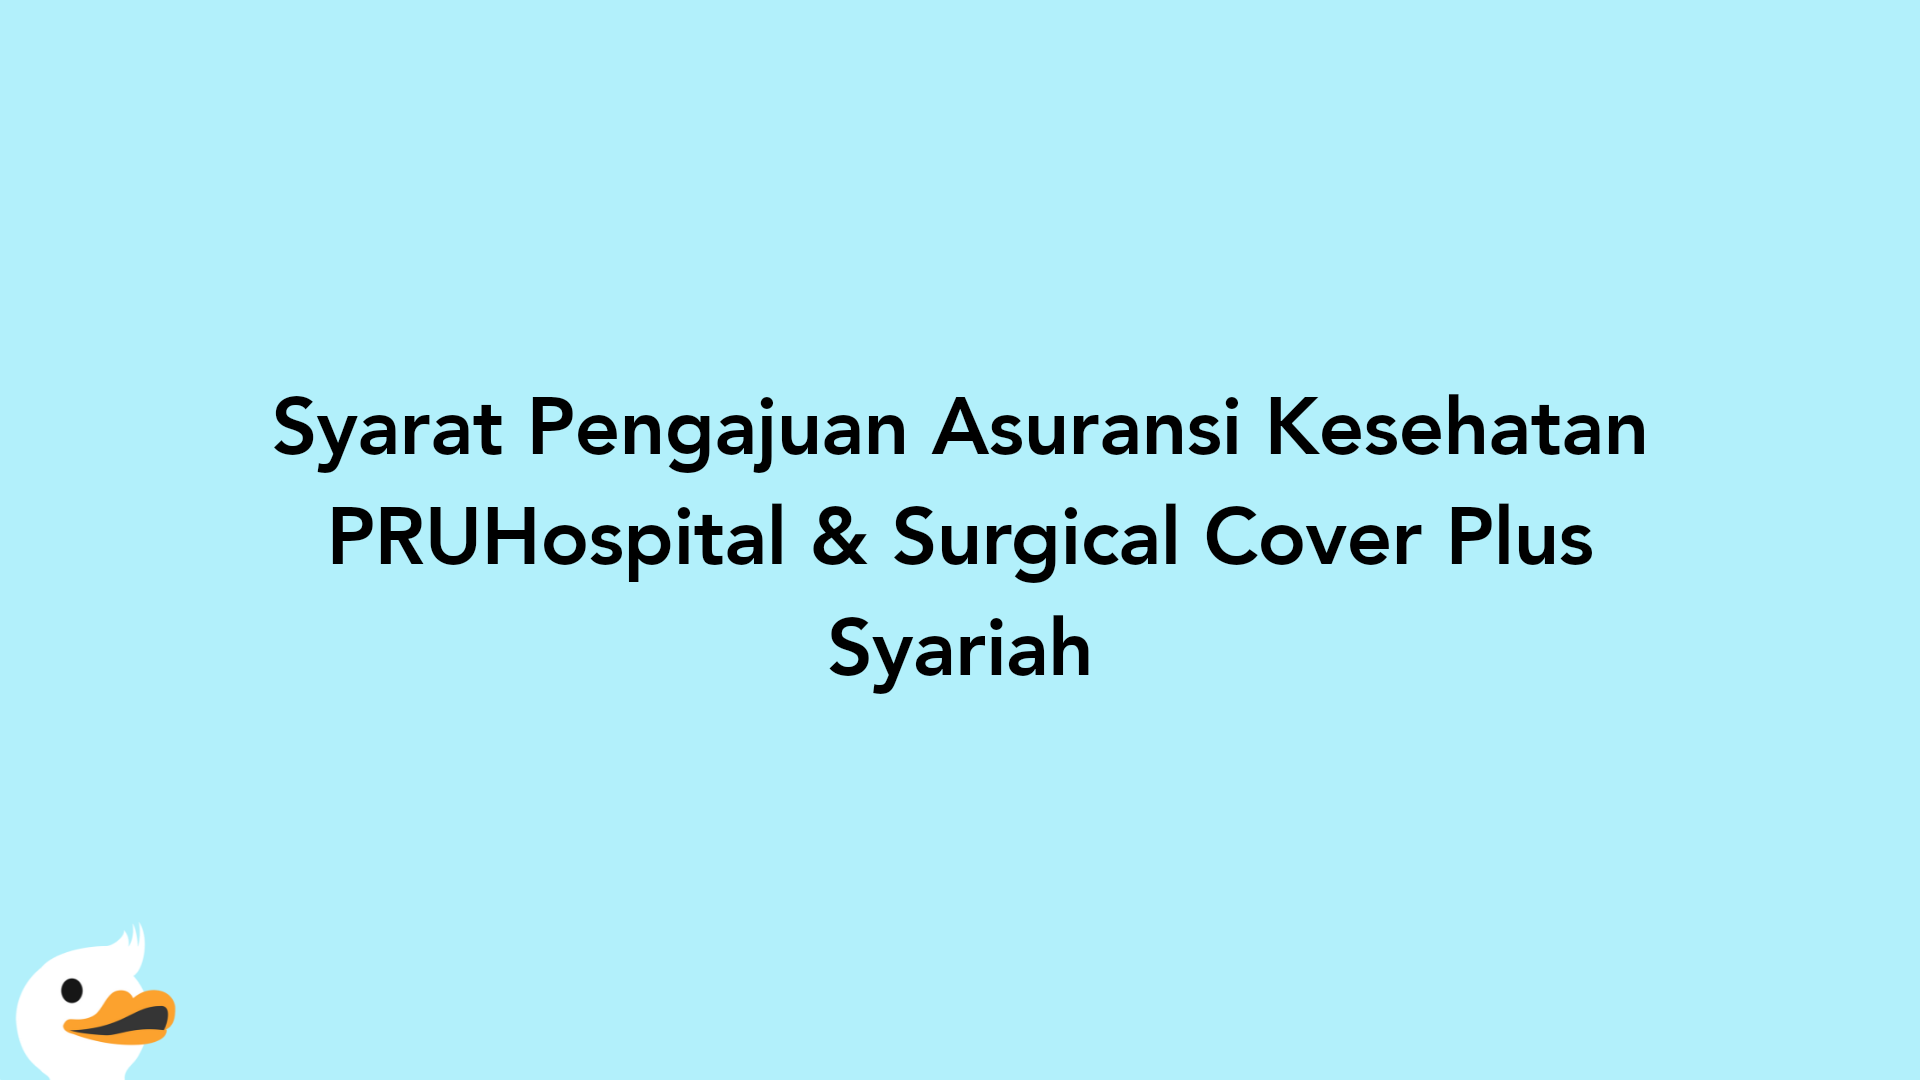 Syarat Pengajuan Asuransi Kesehatan PRUHospital & Surgical Cover Plus Syariah